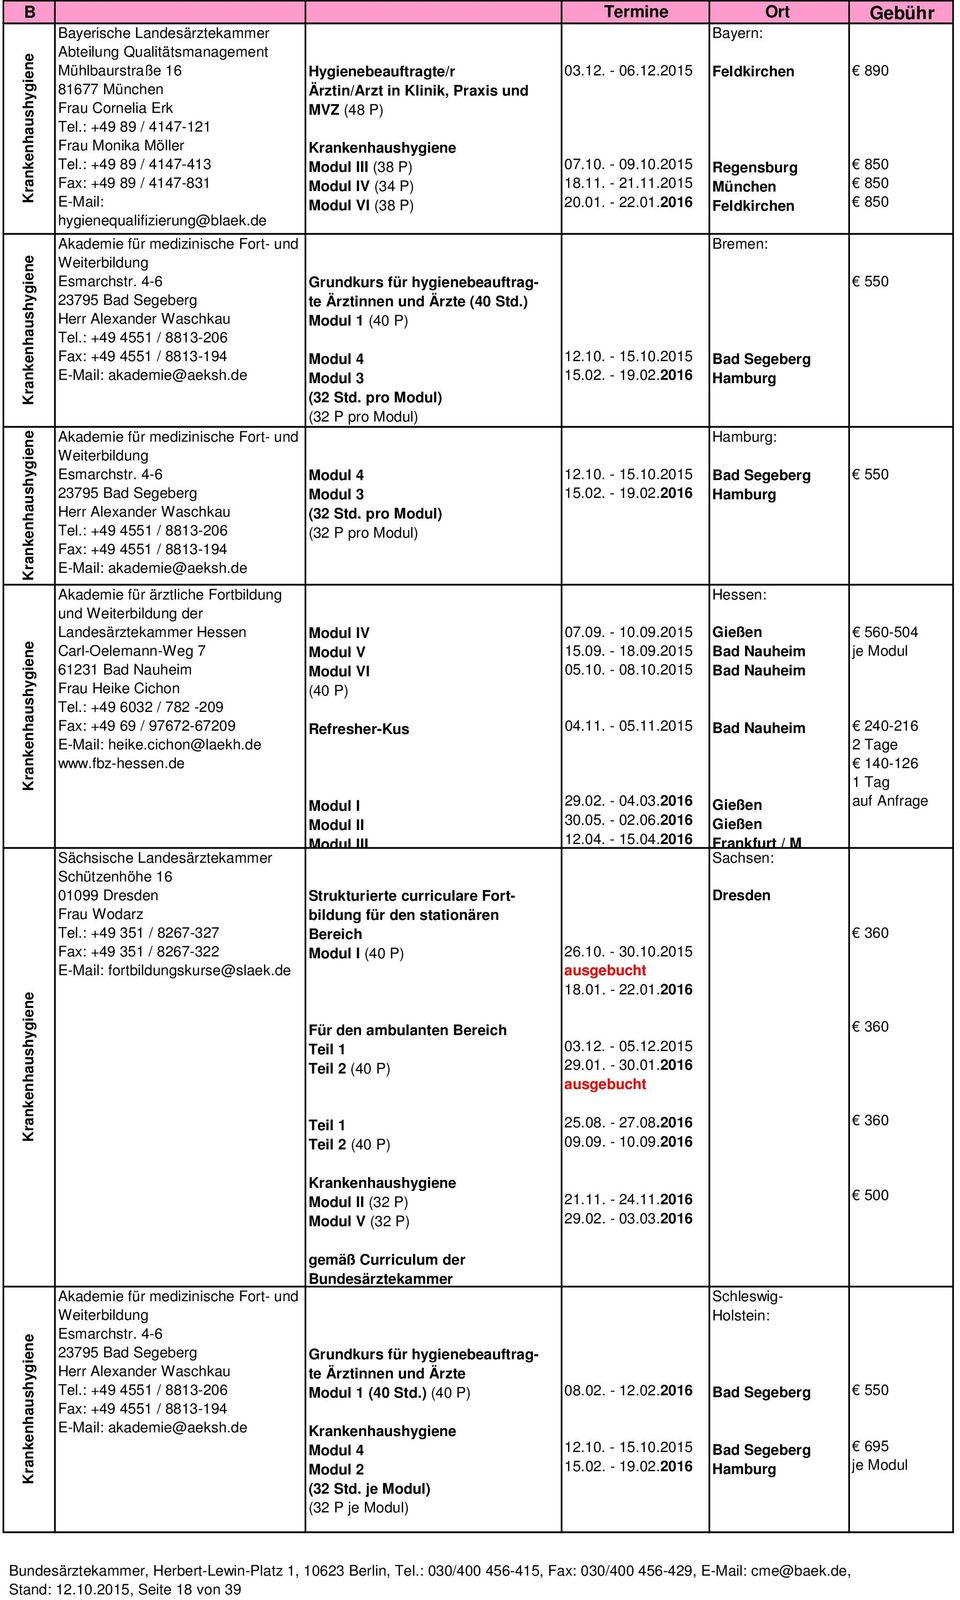 : +49 89 / 4147-413 Modul III (38 P) 07.10. - 09.10.2015 Regensburg 850 Fax: +49 89 / 4147-831 Modul IV (34 P) 18.11. - 21.11.2015 München 850 E-Mail: Modul VI (38 P) 20.01. - 22.01.2016 Feldkirchen 850 hygienequalifizierung@blaek.